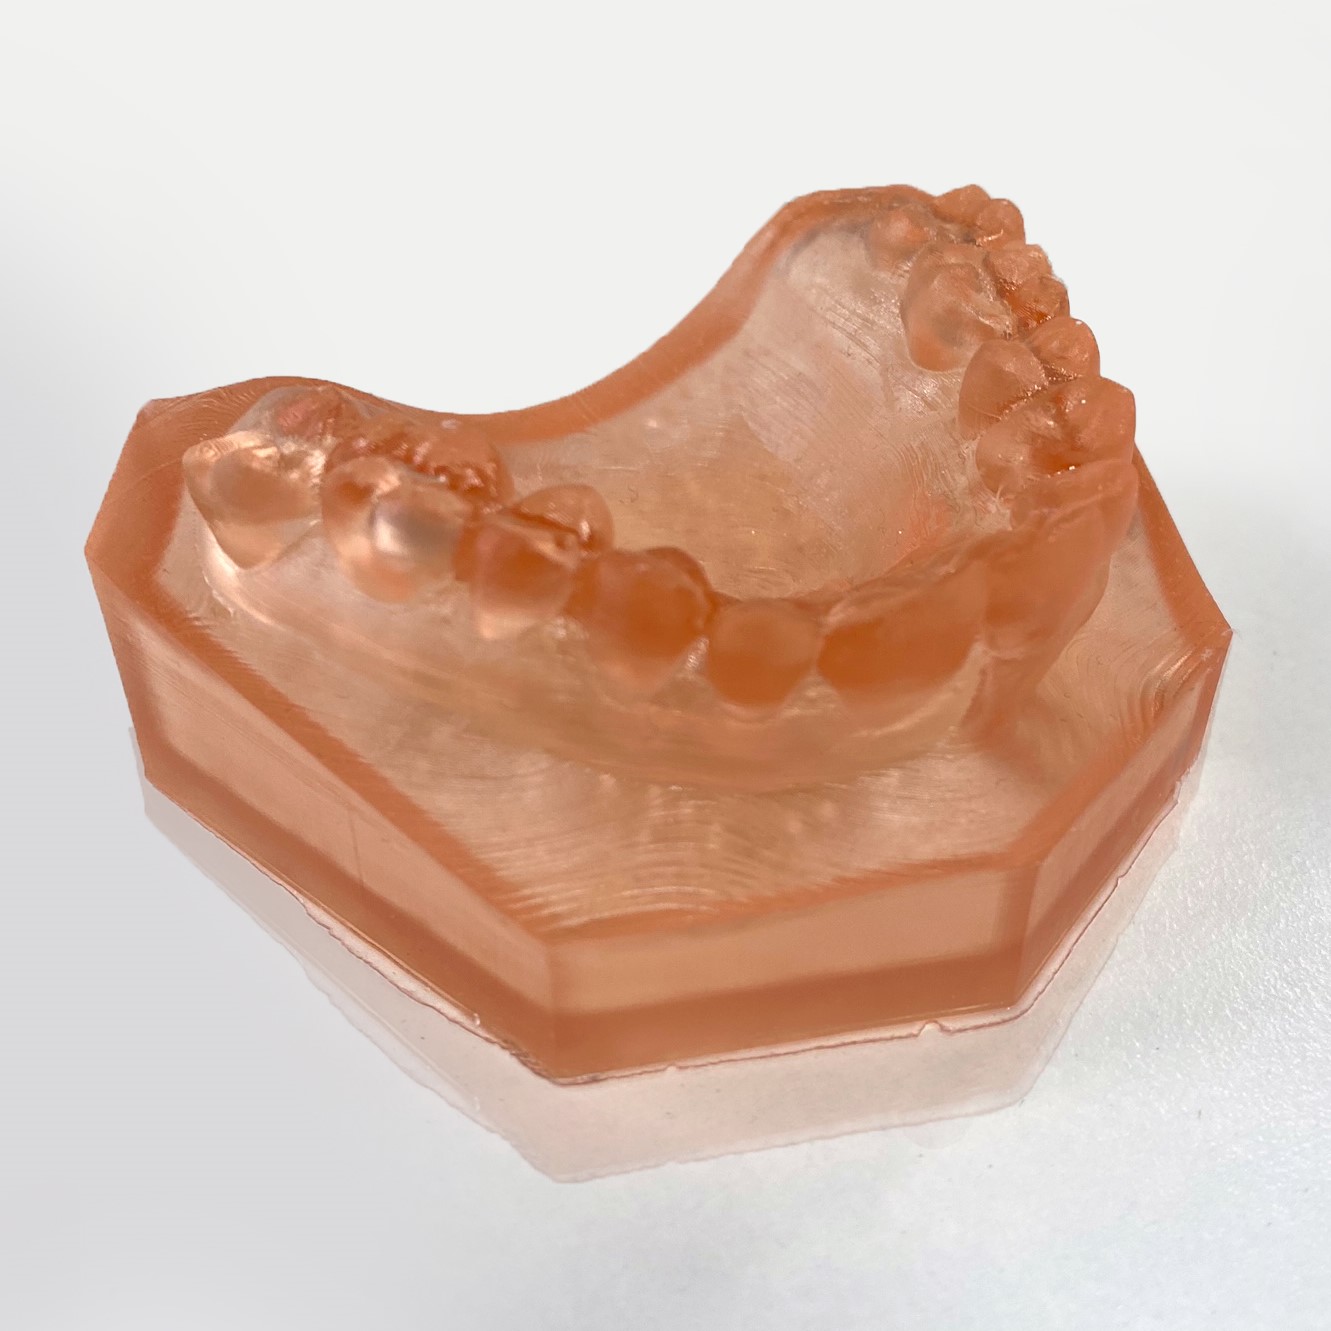 A 3D printed biocompatible dental part. Photo via PostProcess Technologies.